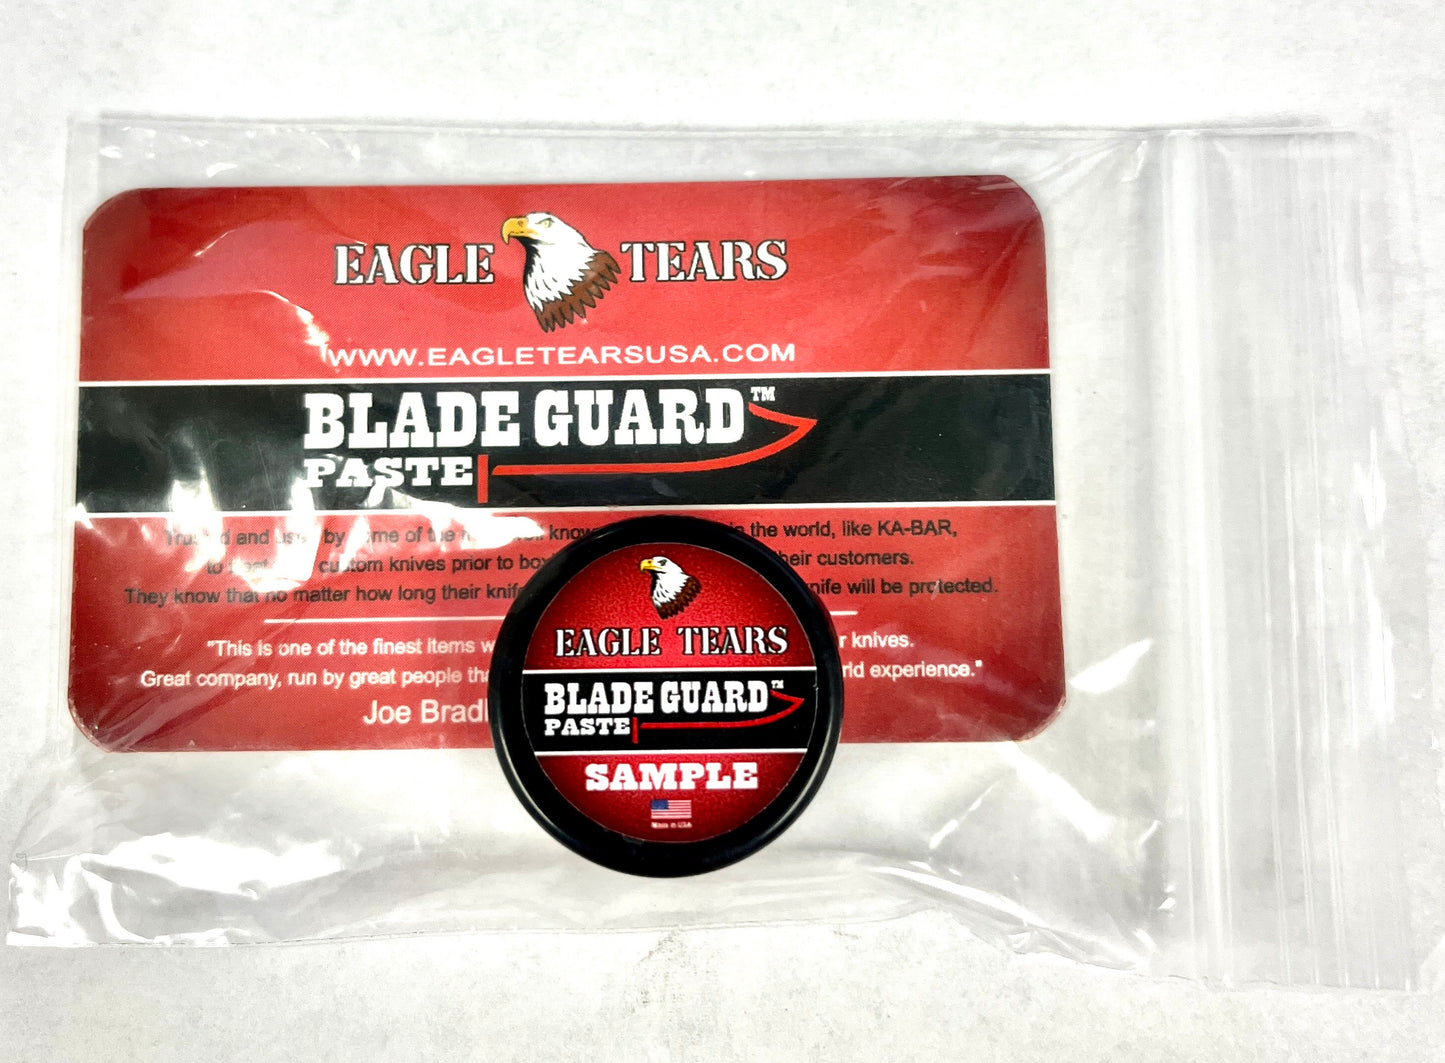 3g sample of Blade Guard